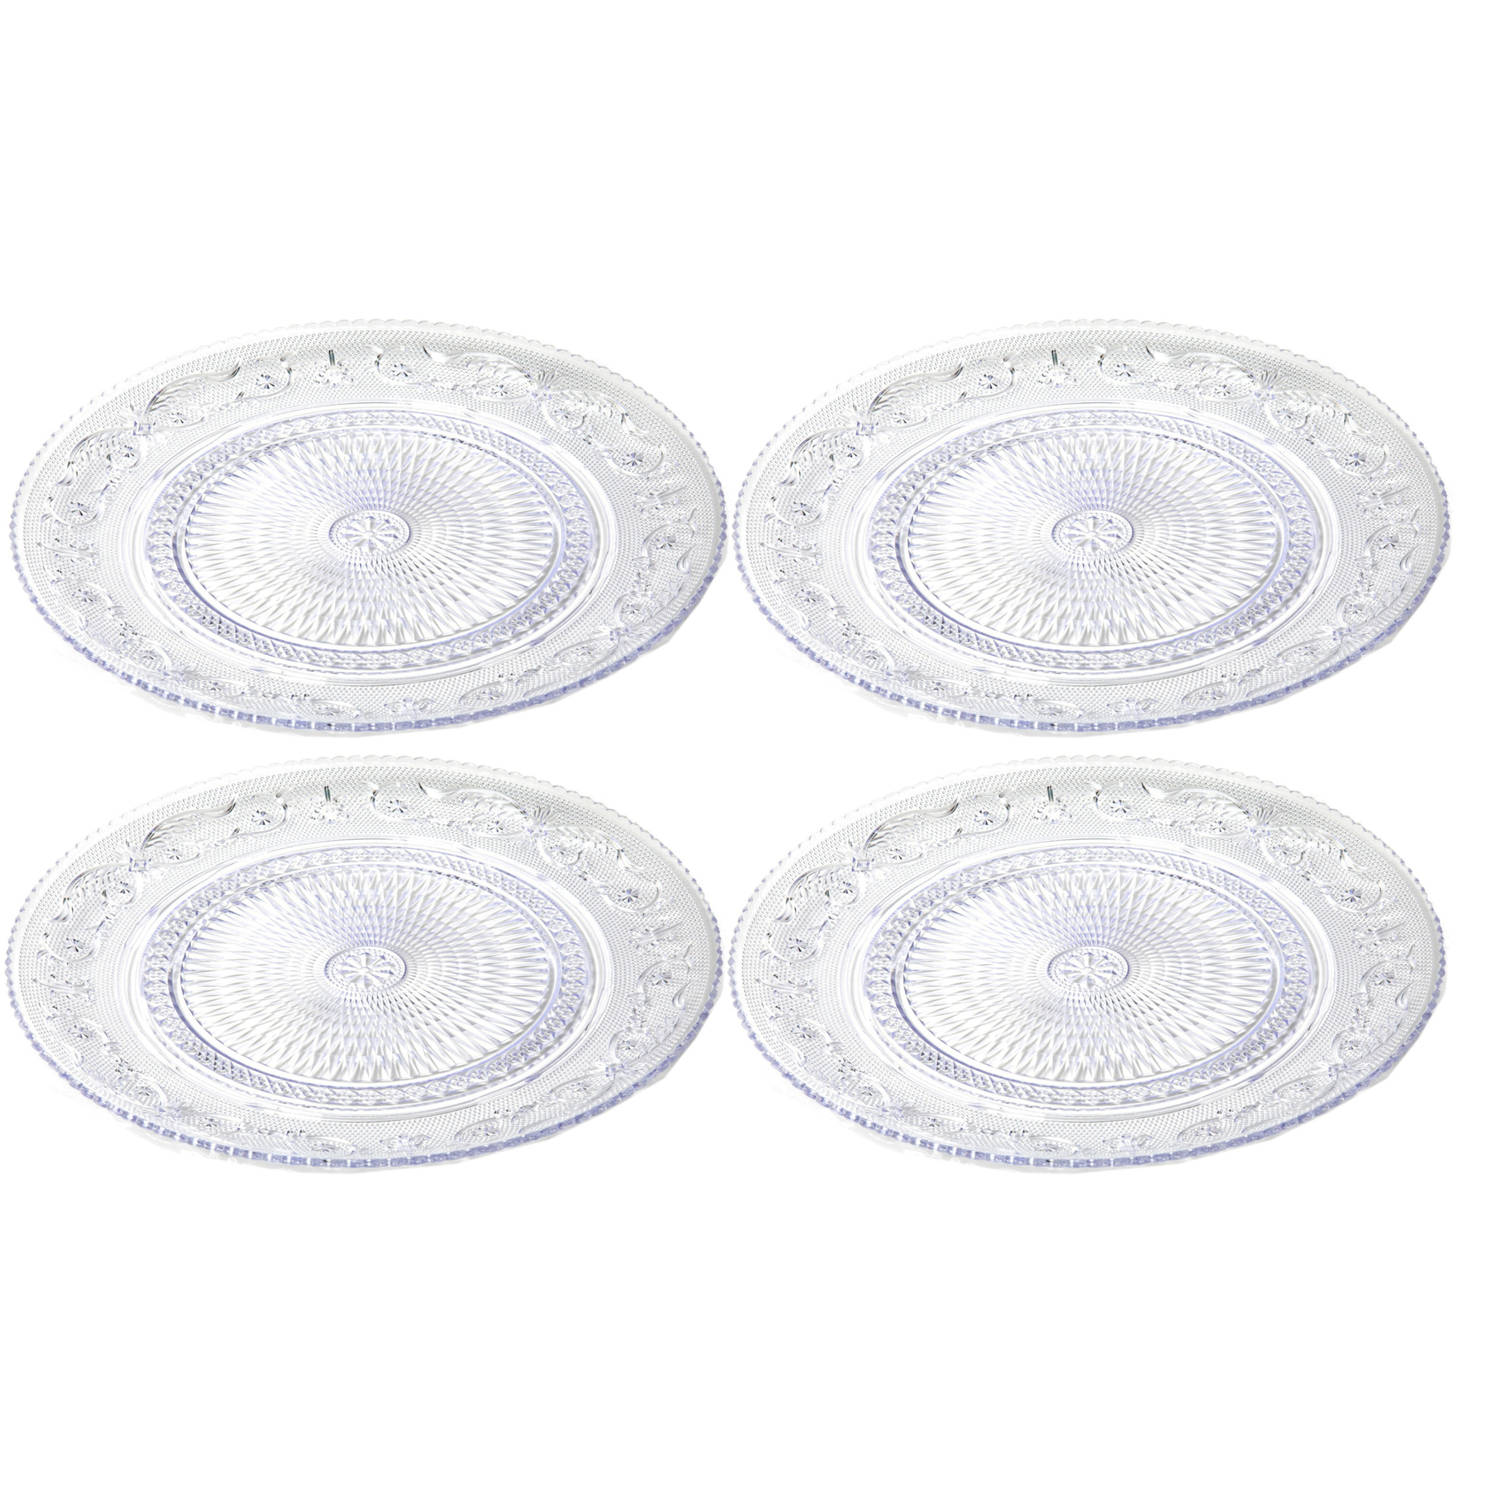 Plasticforte Onbreekbare Ontbijt/gebakbordjes - 4x - kunststof - kristal stijl - transparant - 18 cm - Campingborden